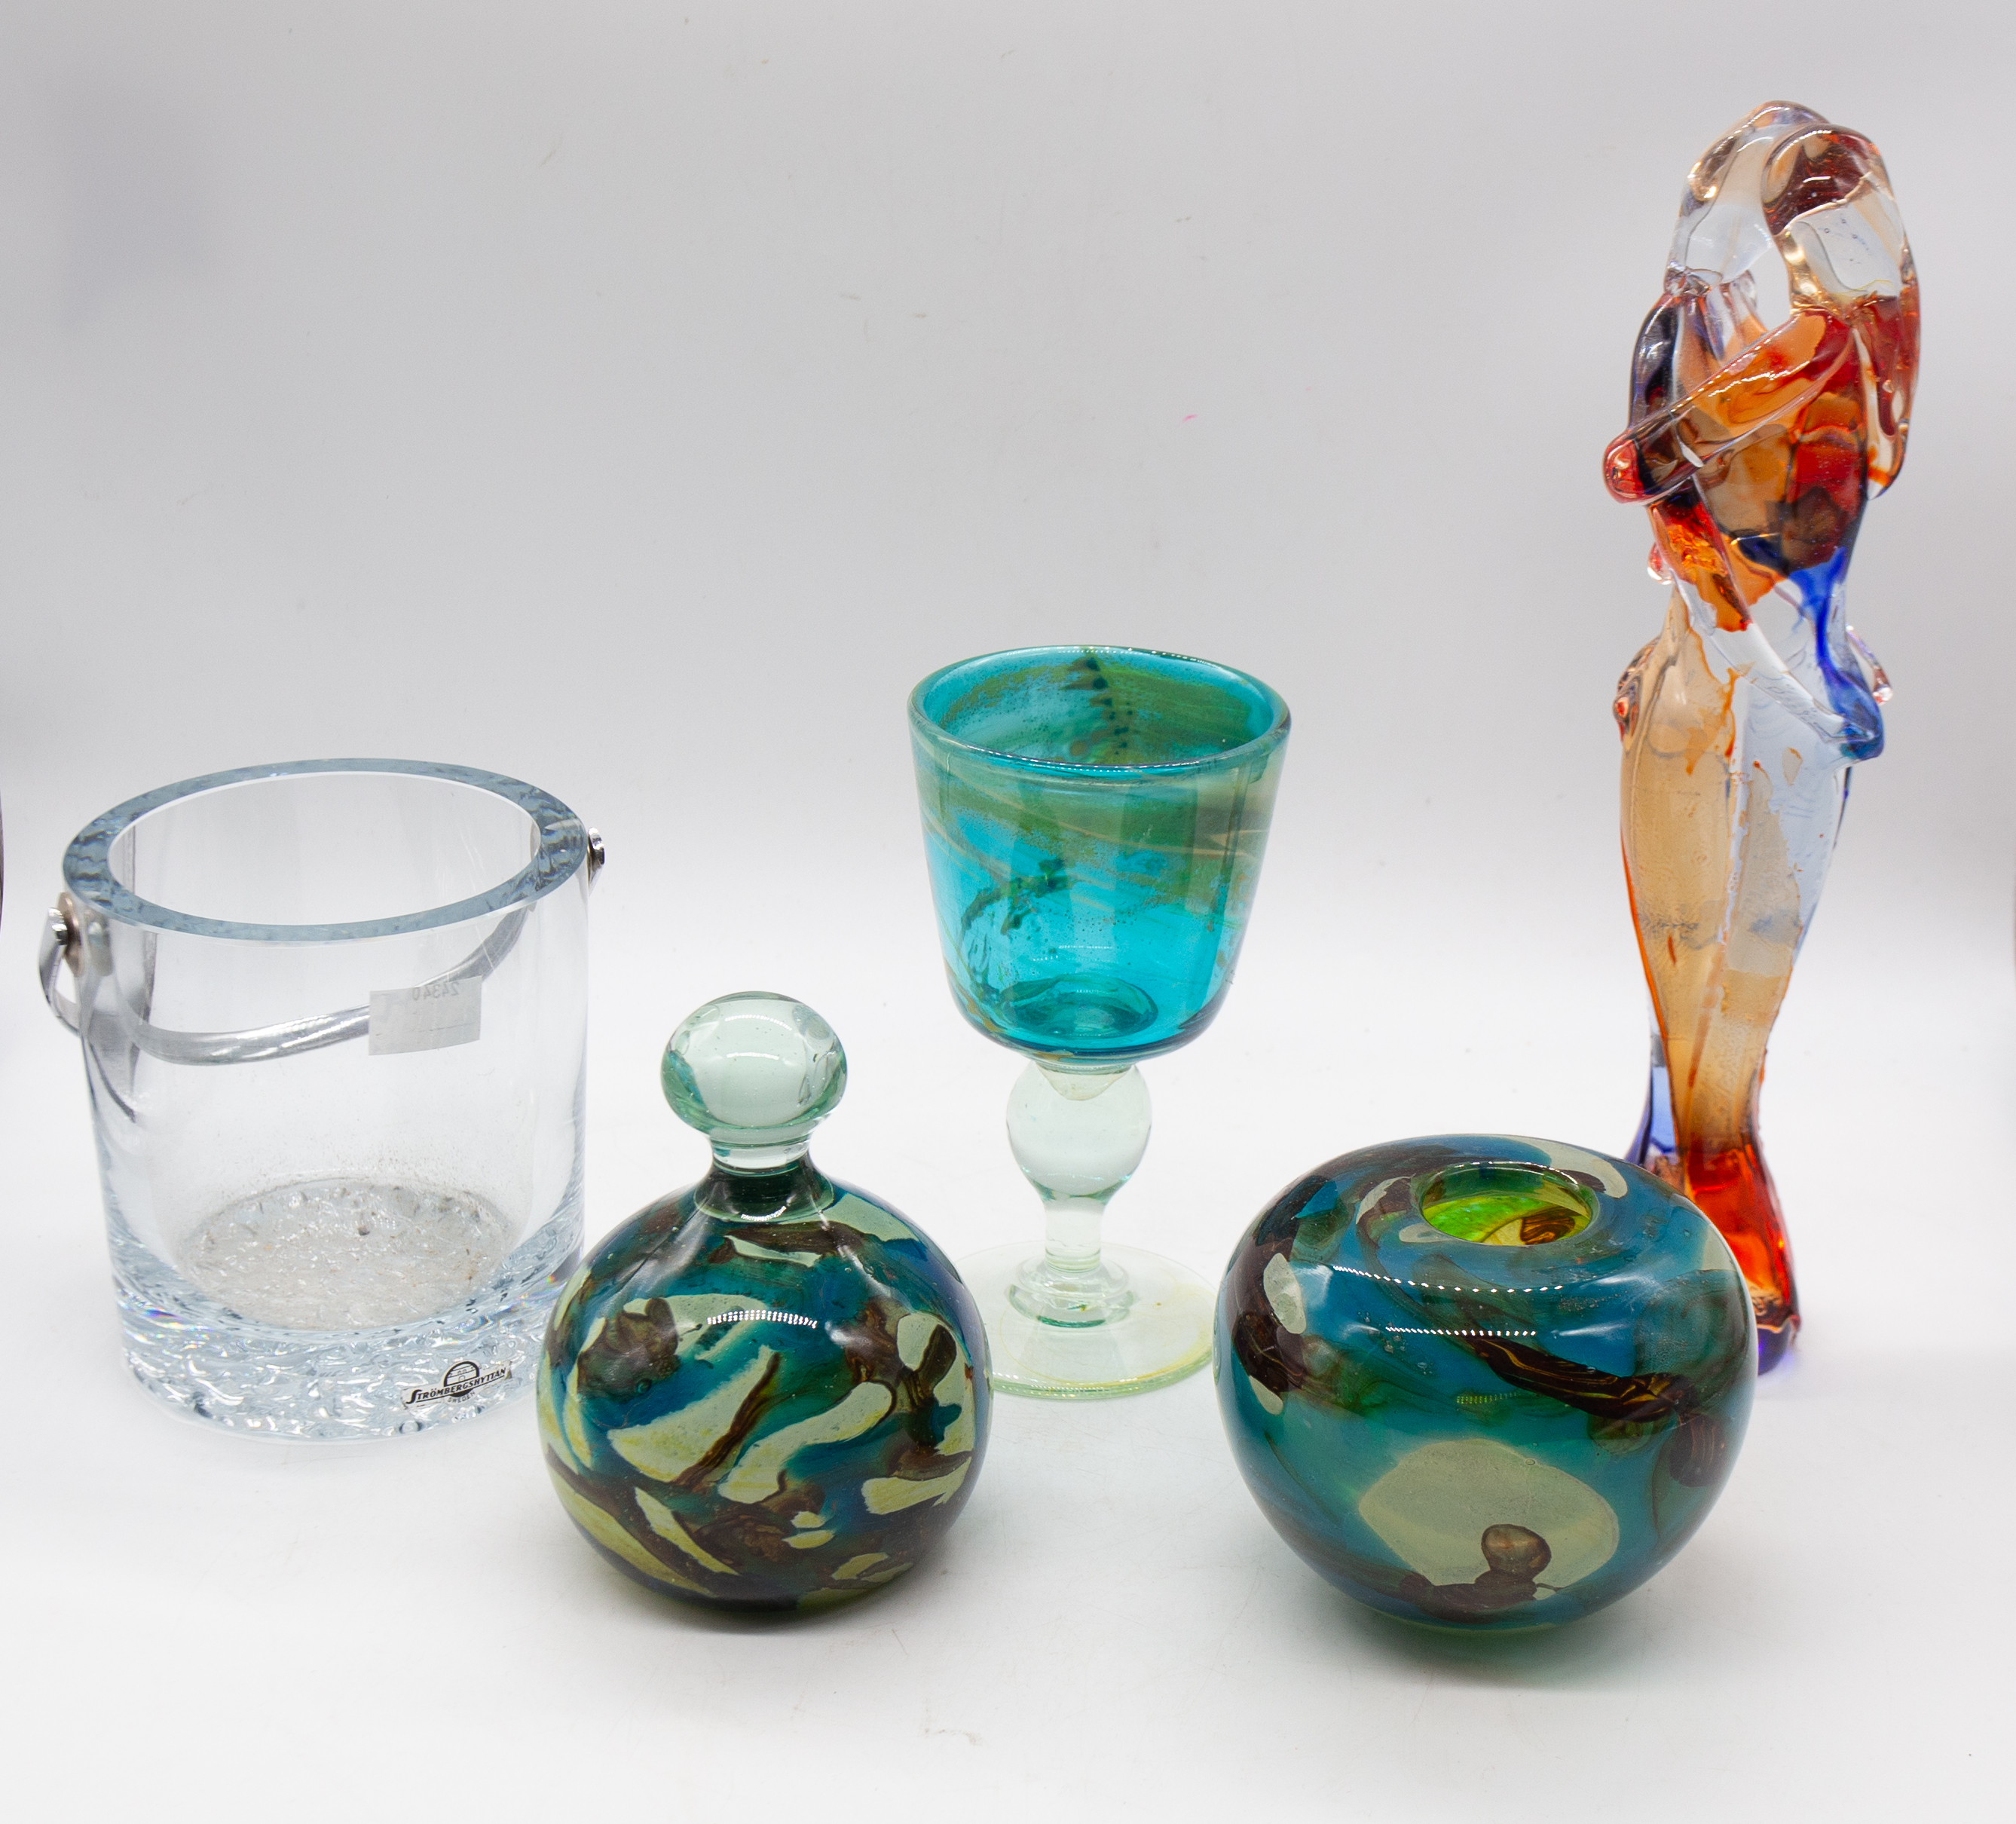 Studio glass comprising Mdina goblet, vase and paperweight, Strombergshyttan ice bucket, Murano